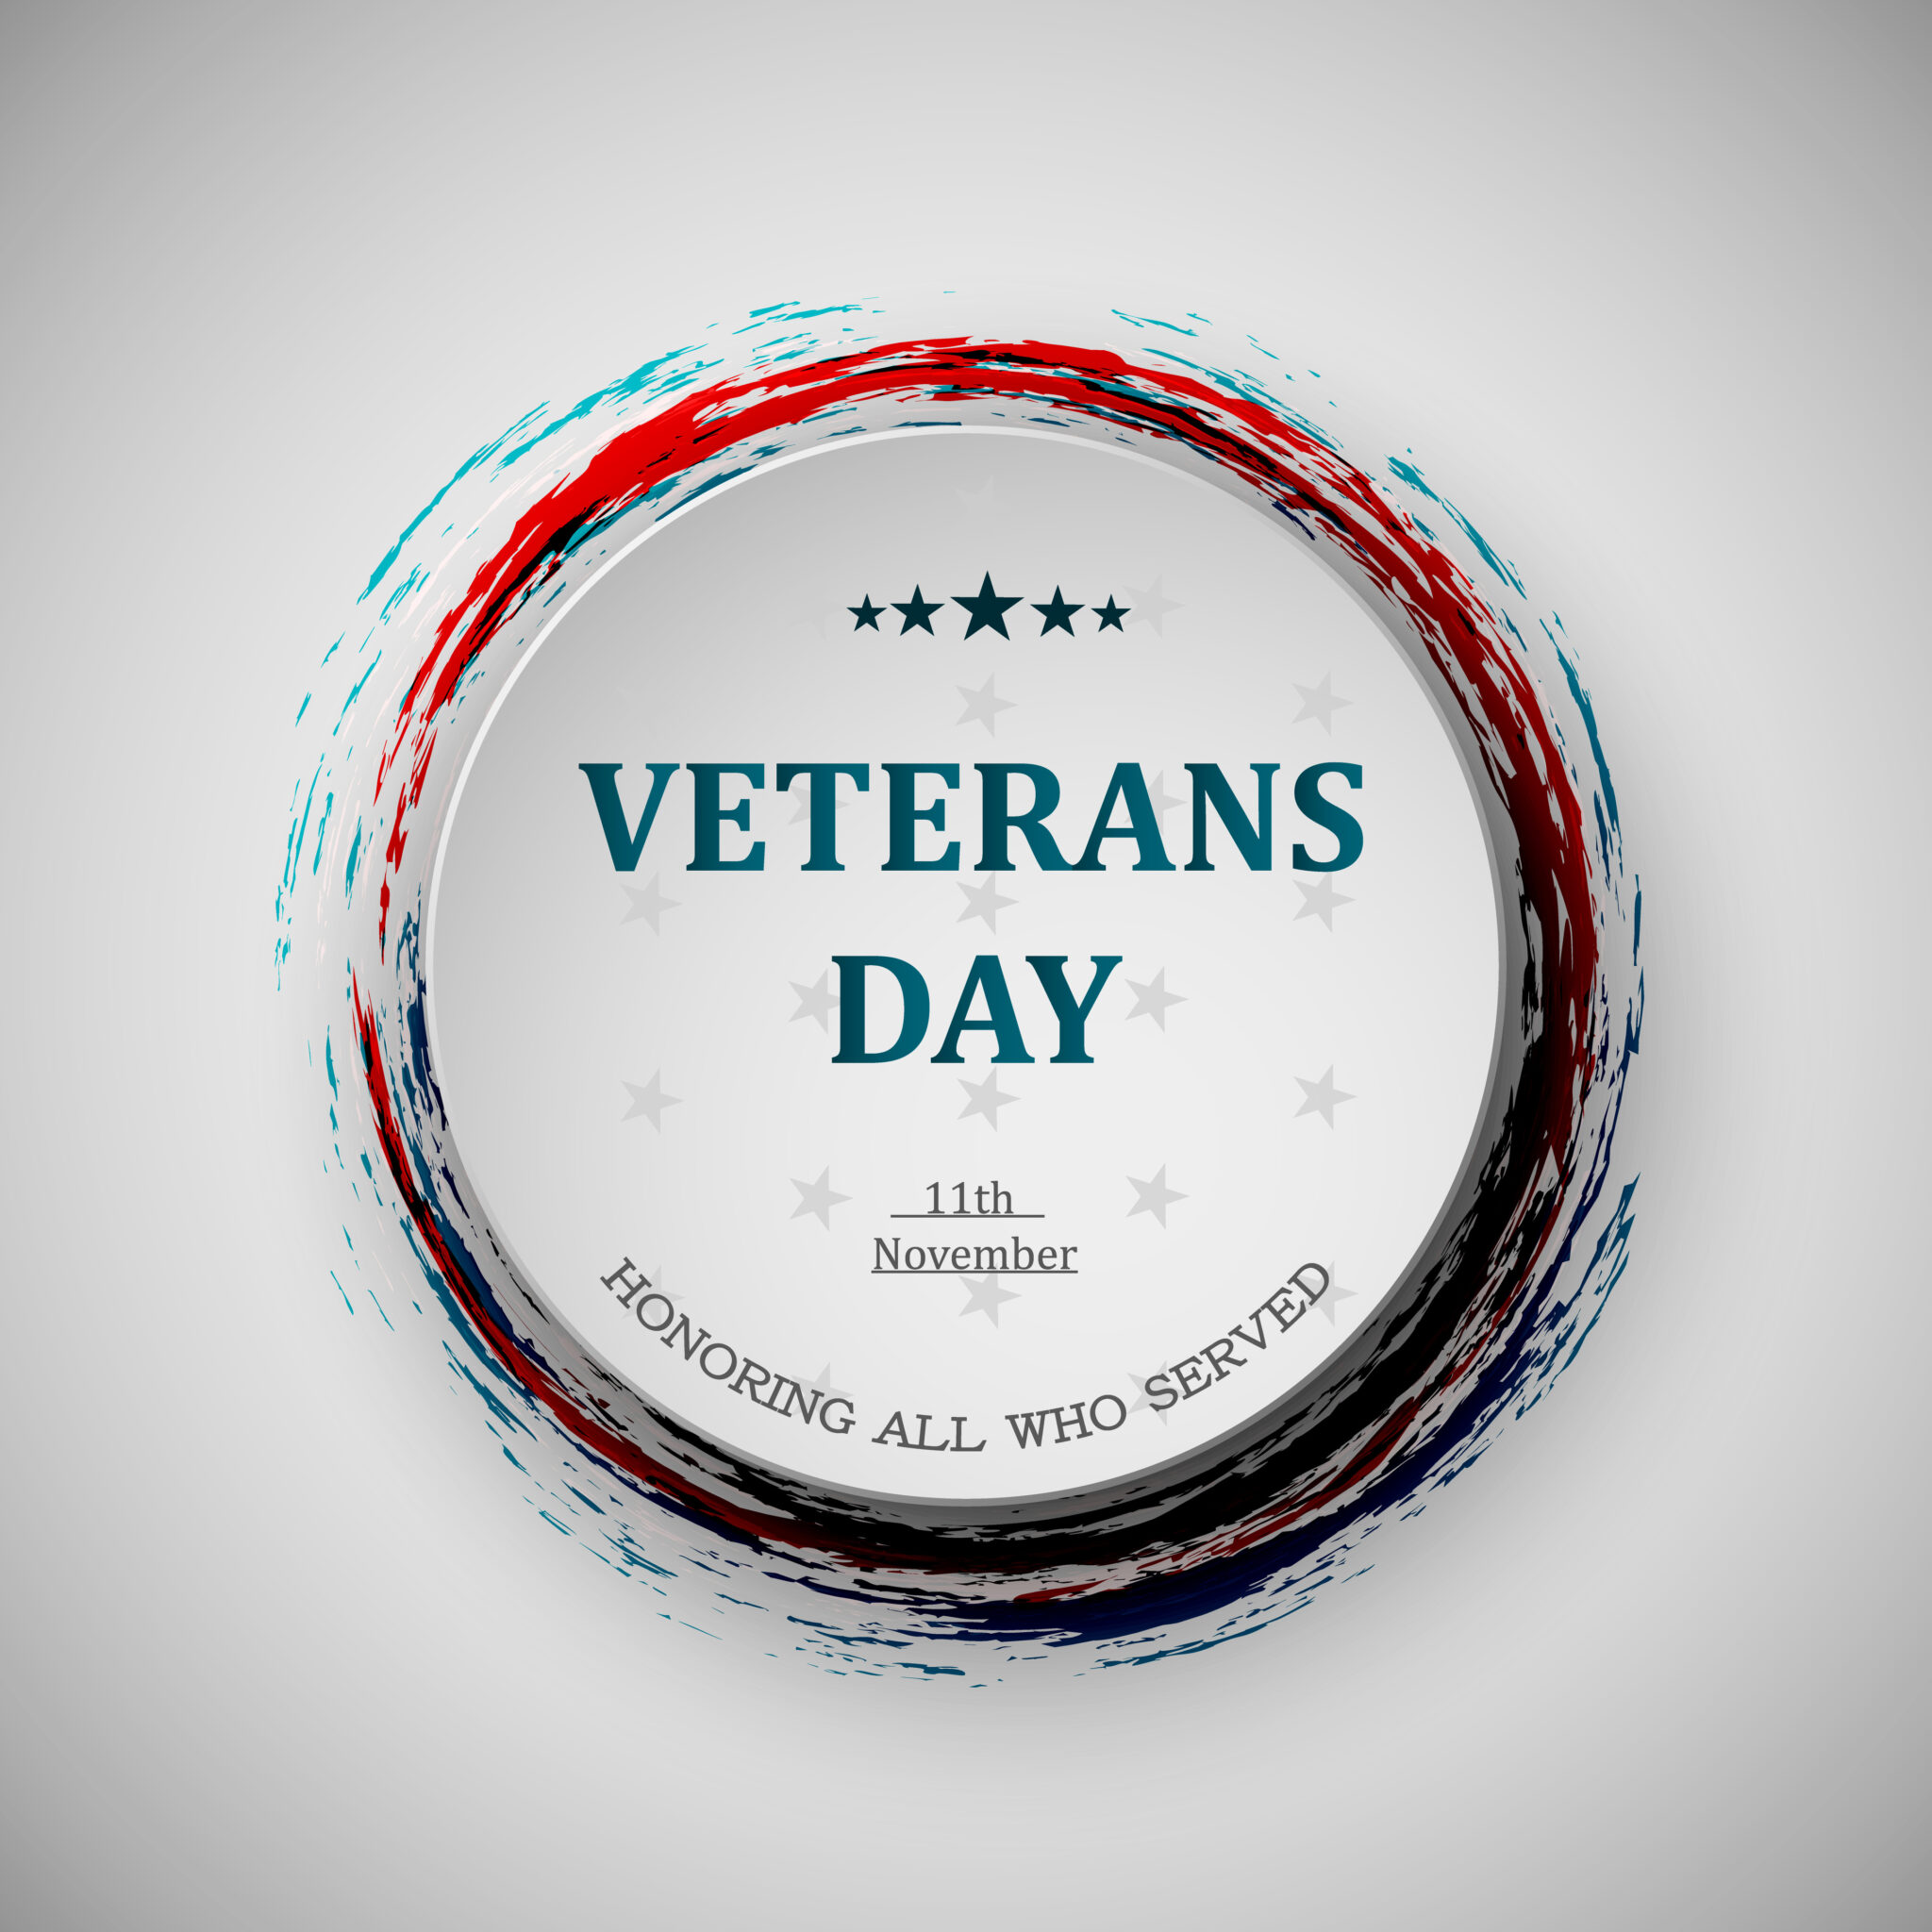 Veterans Day Service [VIRTUAL]